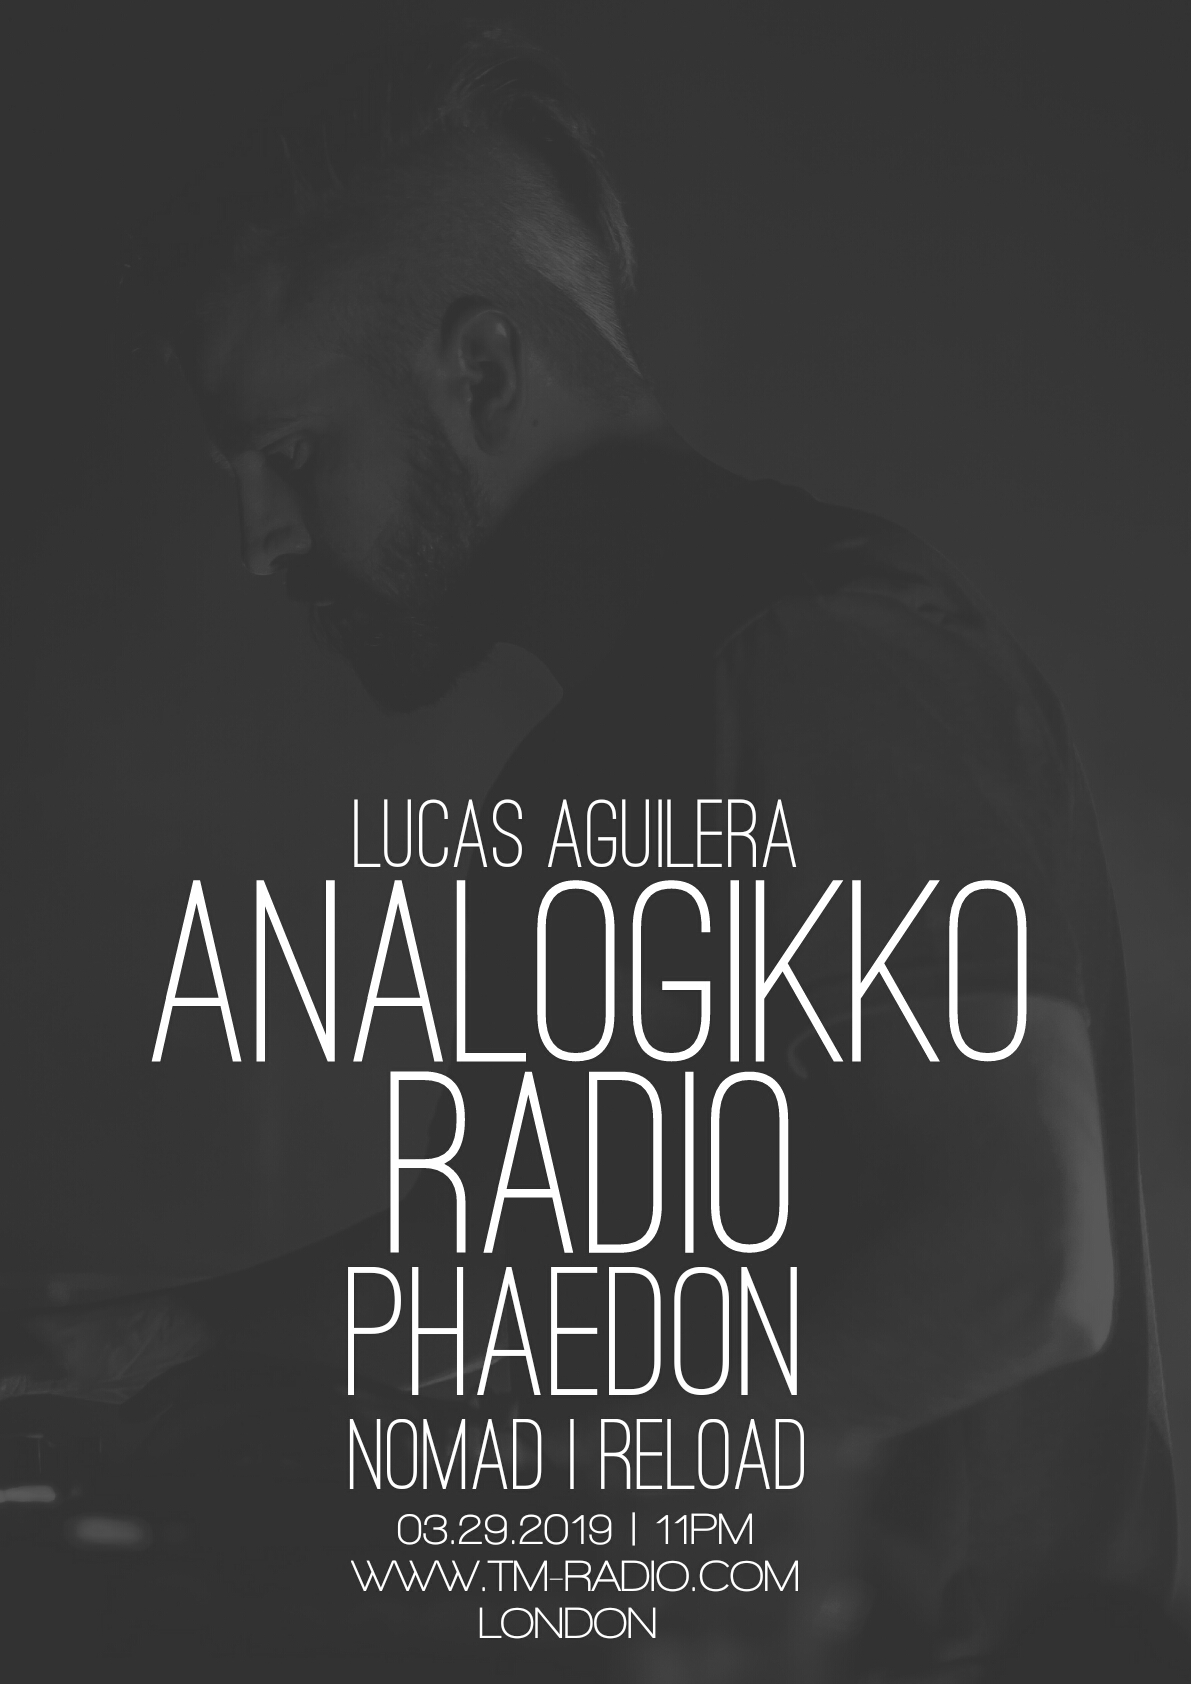 Analogikko Radio :: ANALOGIKKO RADIO BY LUCAS AGUILERA - PHAEDON - GUEST MIX - TM RADIO - Episode 055 (aired on March 29th, 2019) banner logo